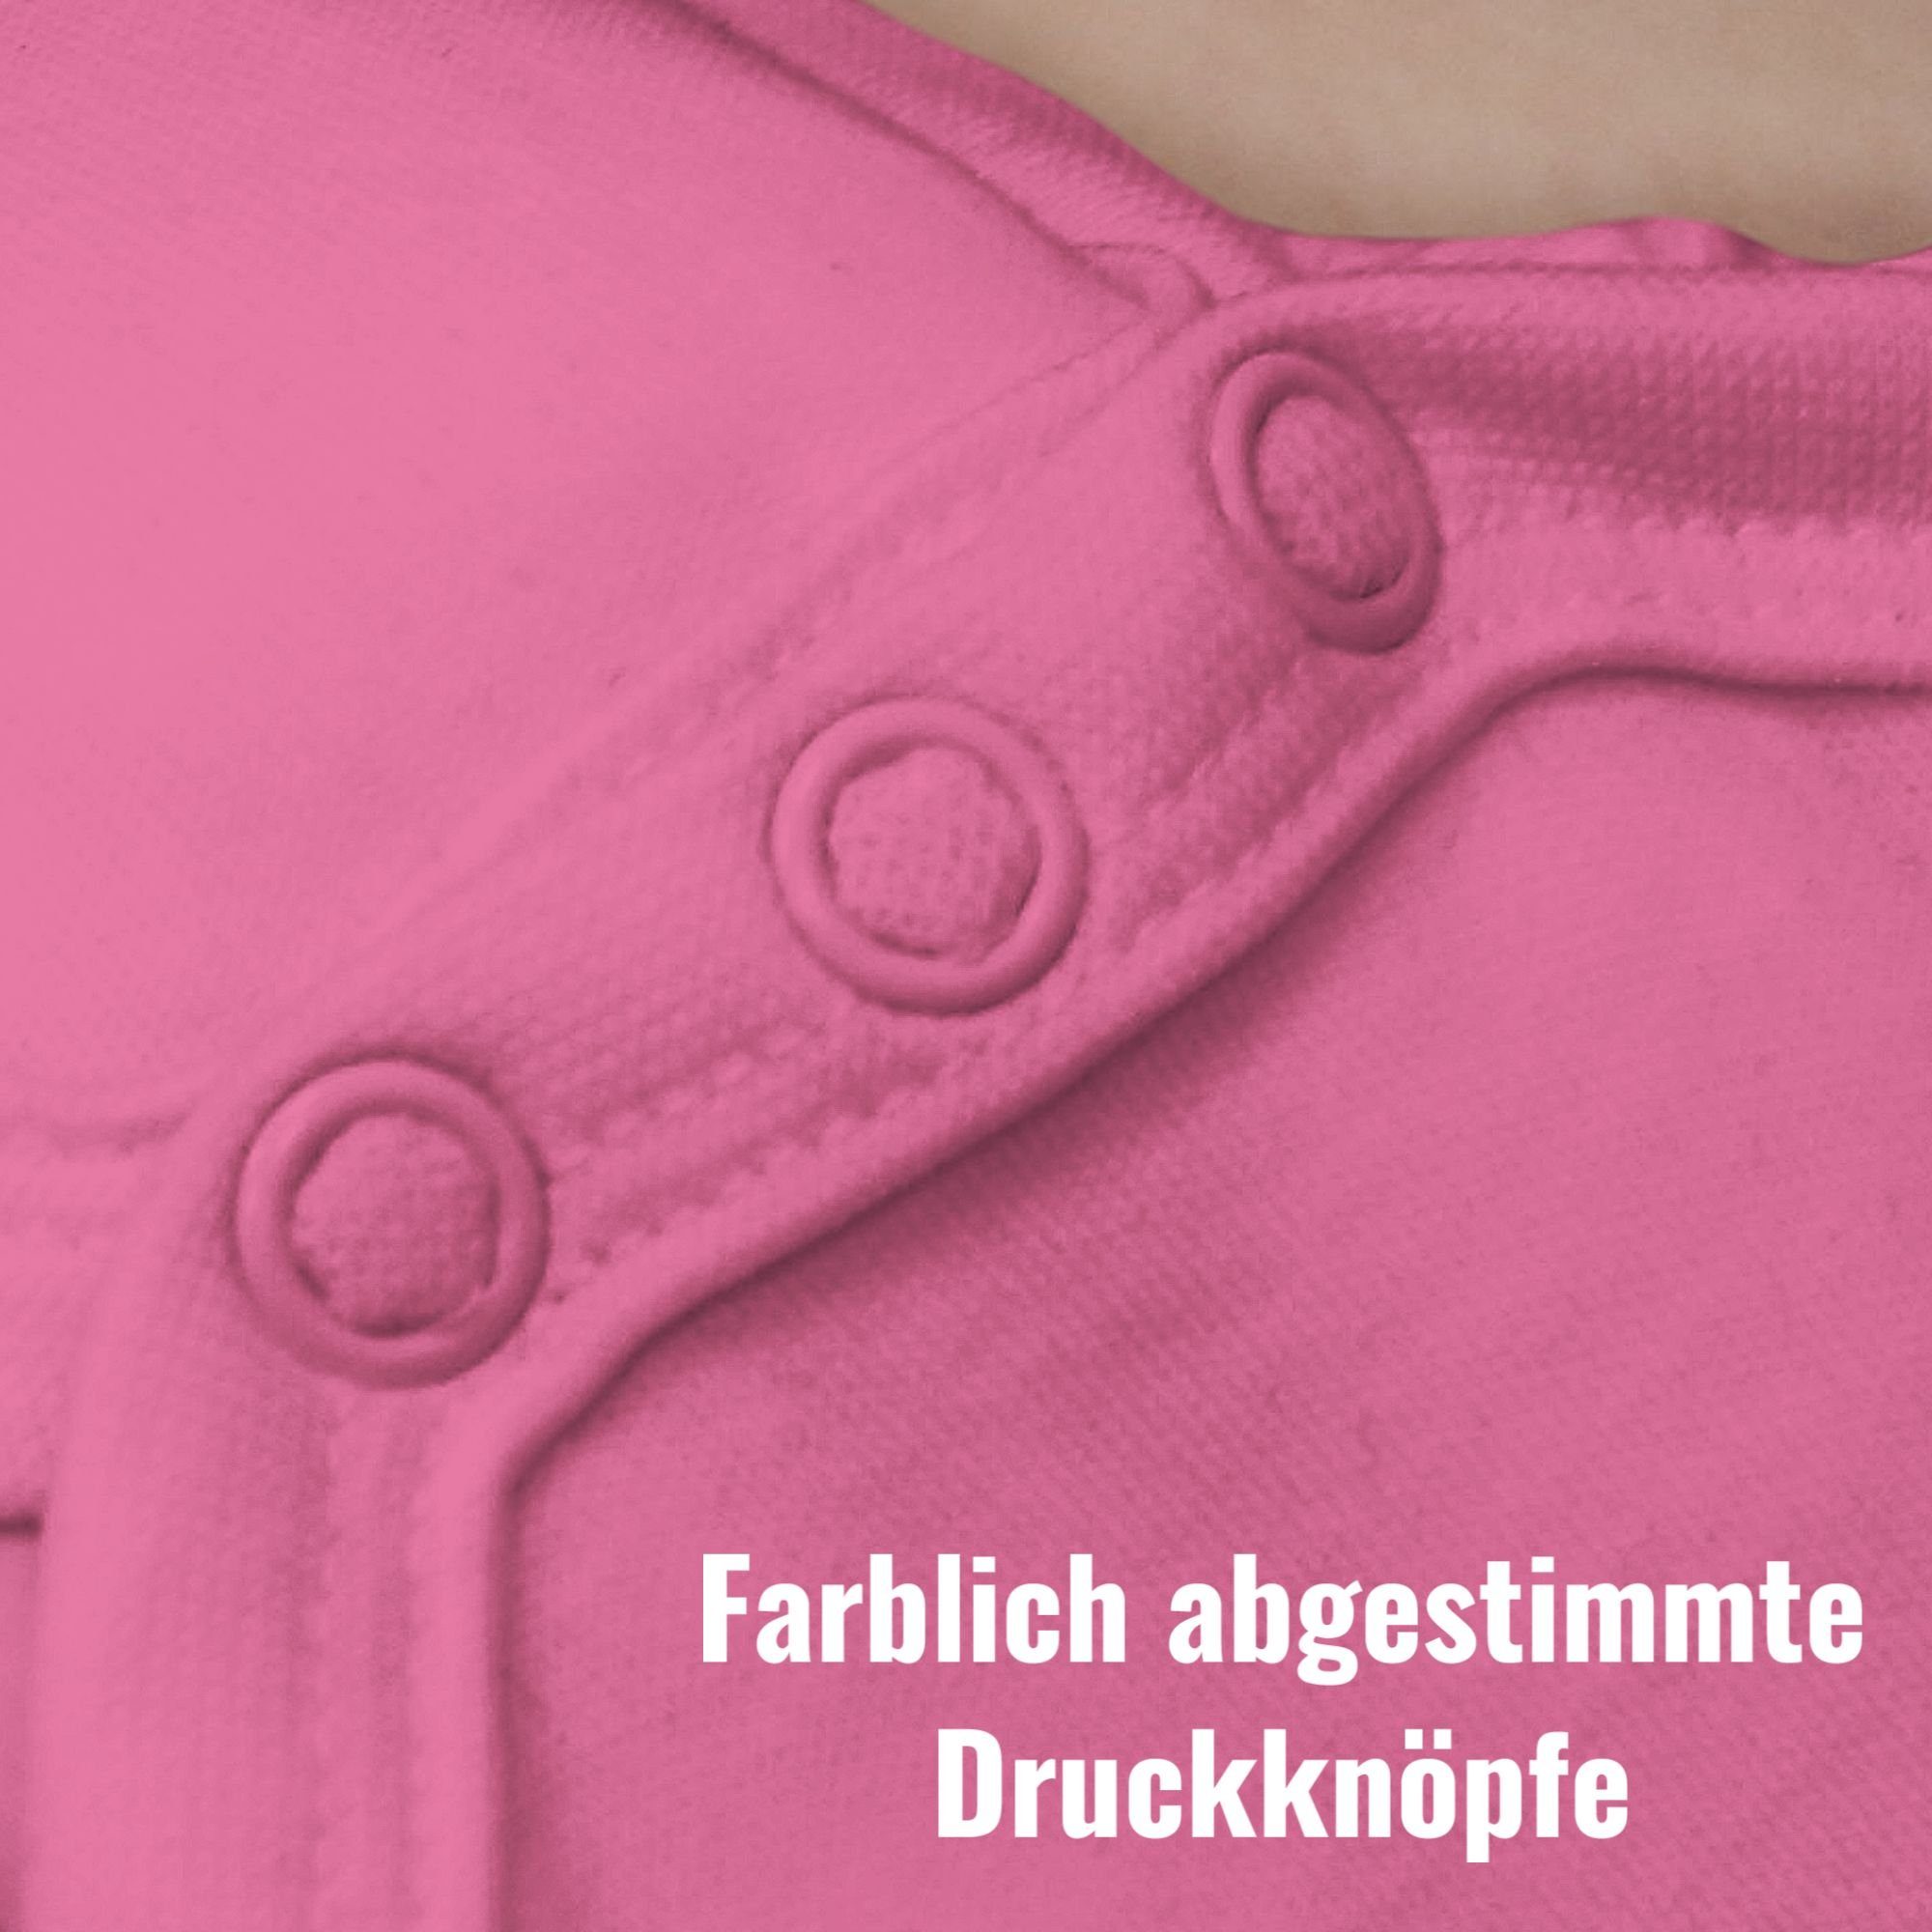 Lausmadel Pink 1 Outfit Mode für Shirtbody Lausmädchen Baby Lausdrindl Shirtracer Lausmadl Oktoberfest